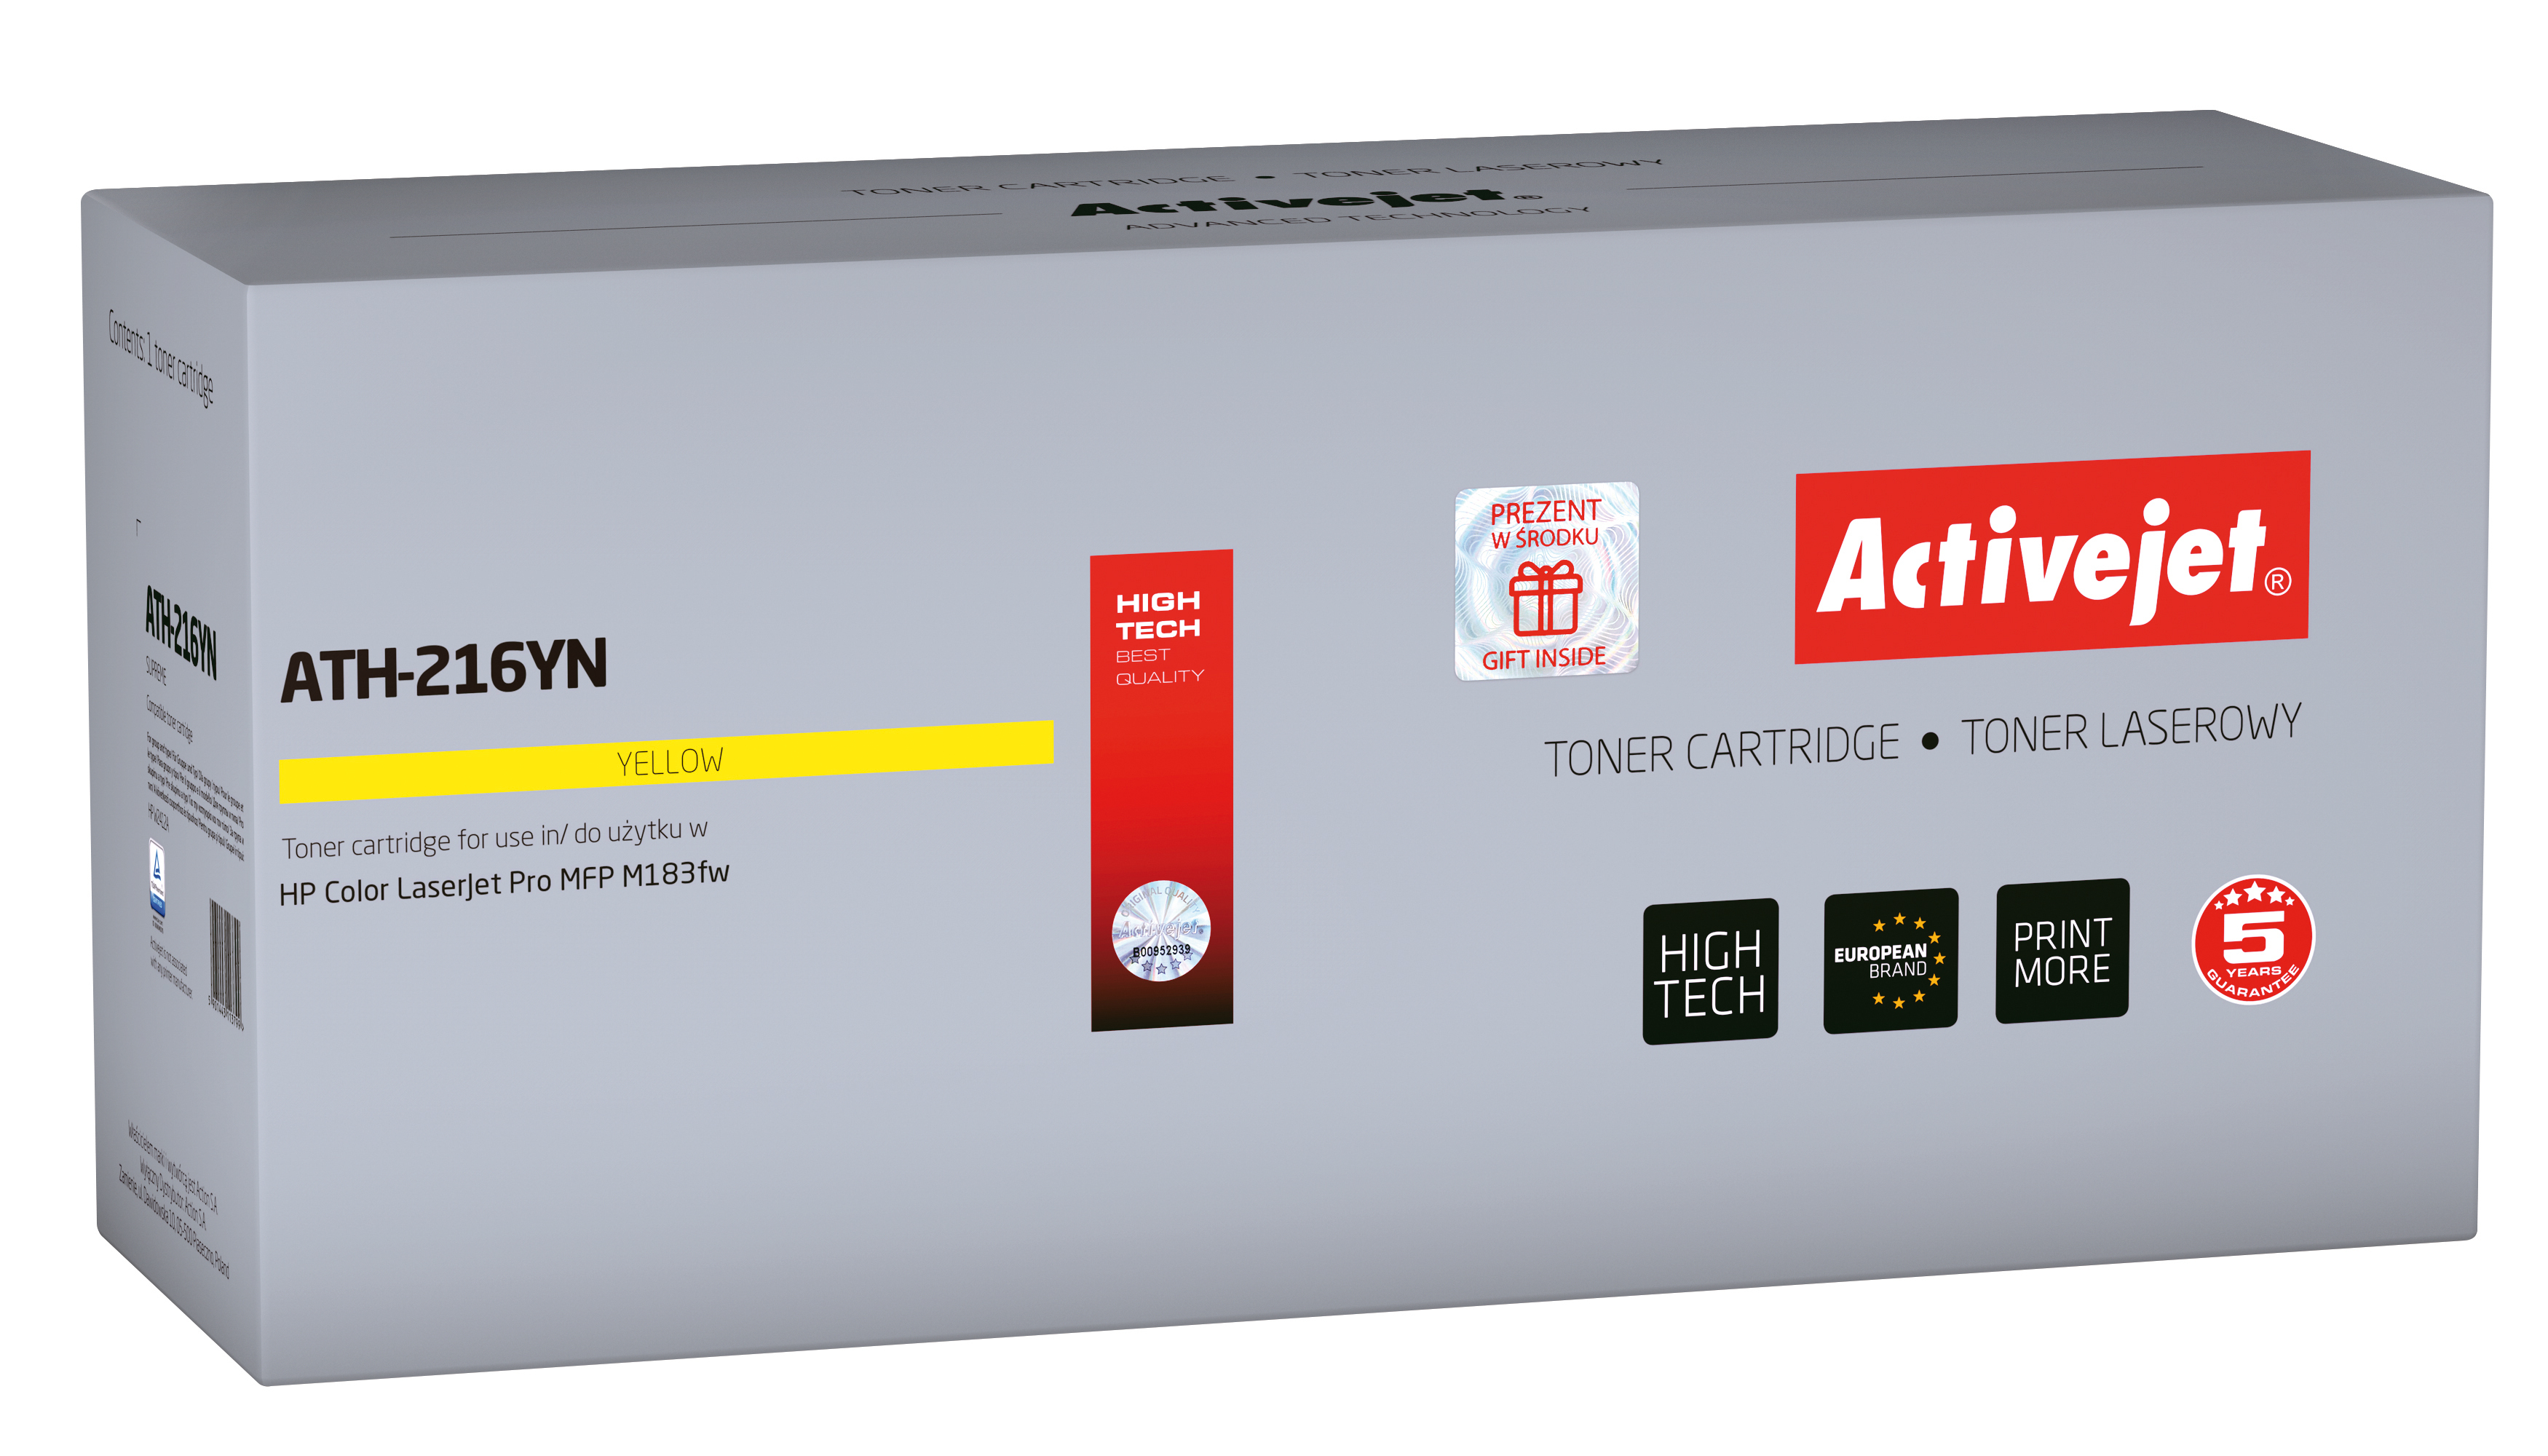 Toner Activejet ATH-216YN do drukarki HP, Zamiennik HP 216A W2412A; Supreme; 850 stron; Żółty, z chipem